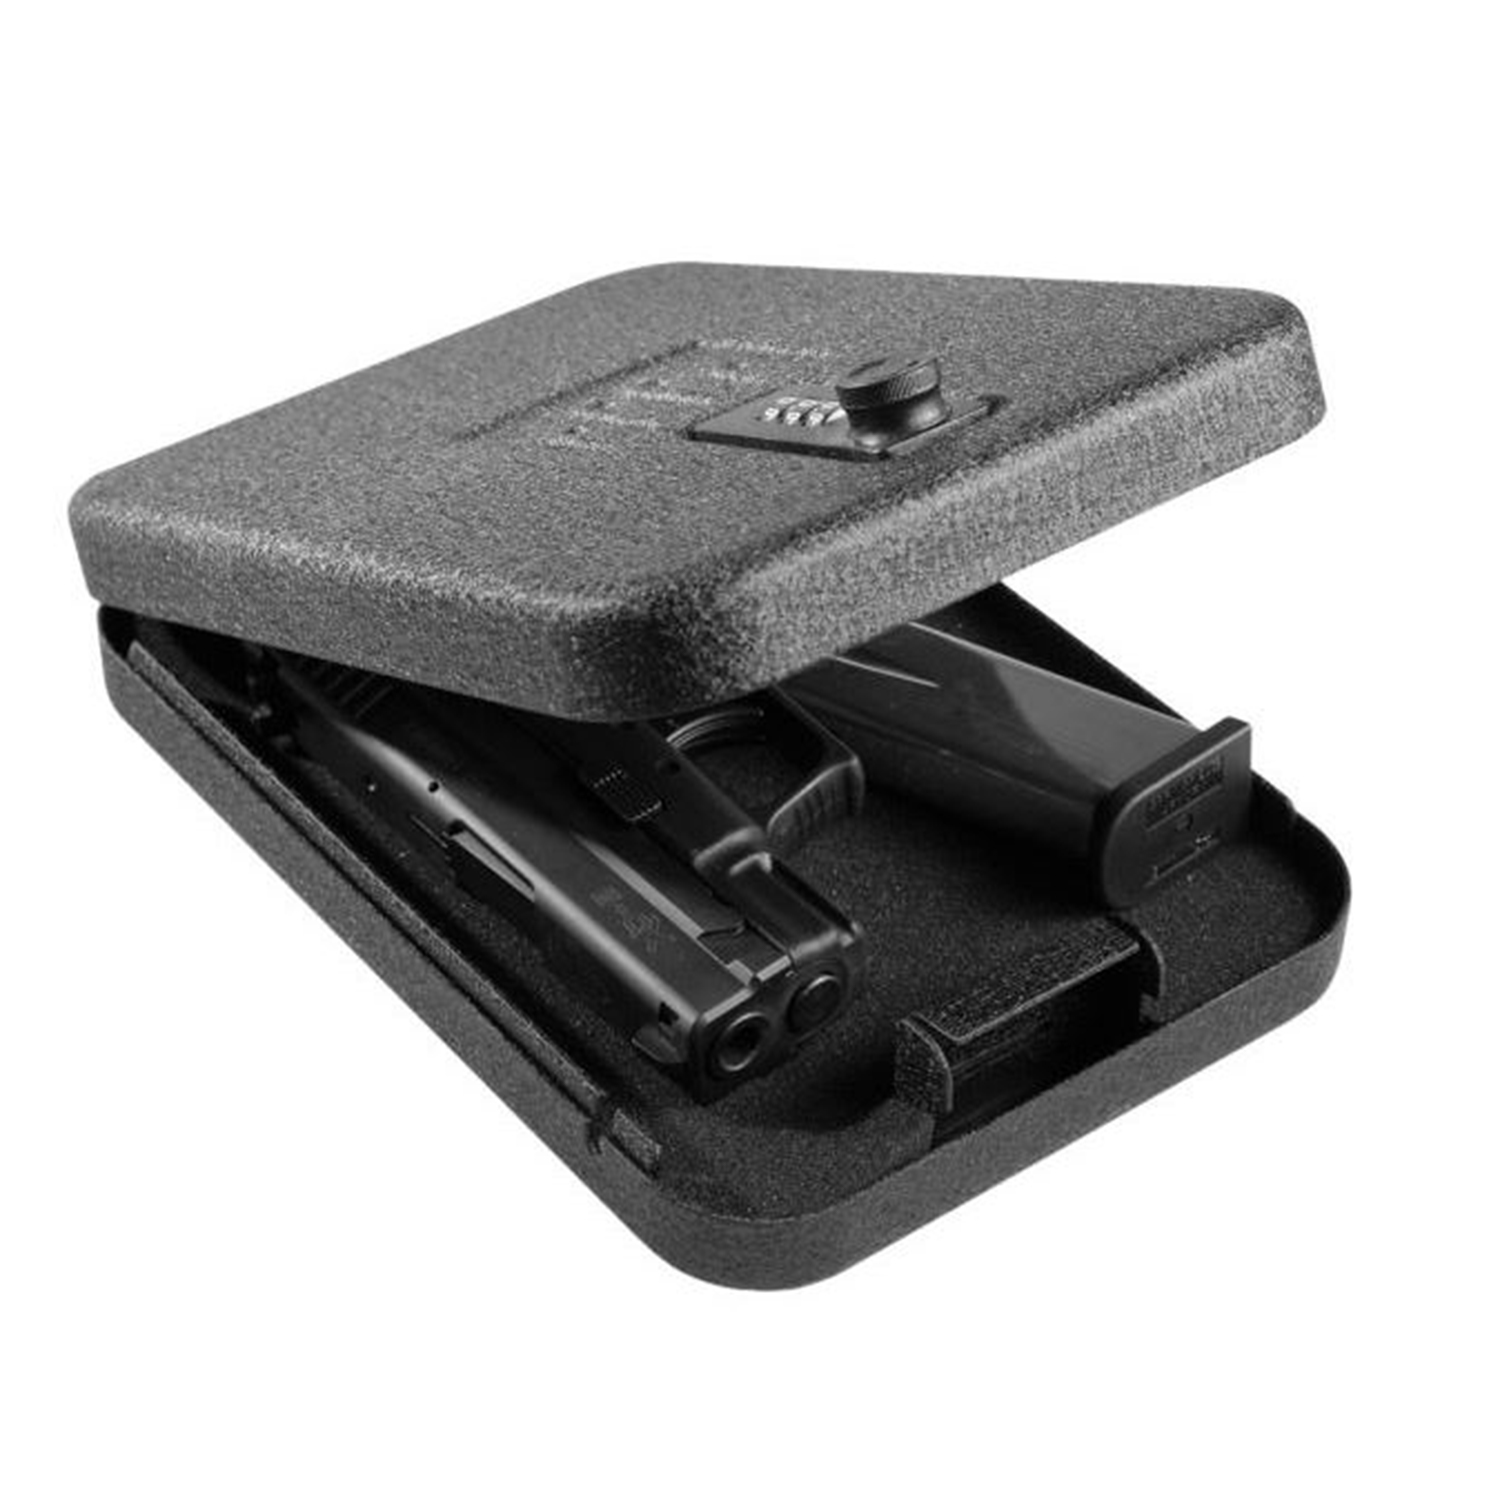 GunVault NanoVault 300 TSA Approved Compact Portable Travel Lock Gun Safe - image 3 of 5